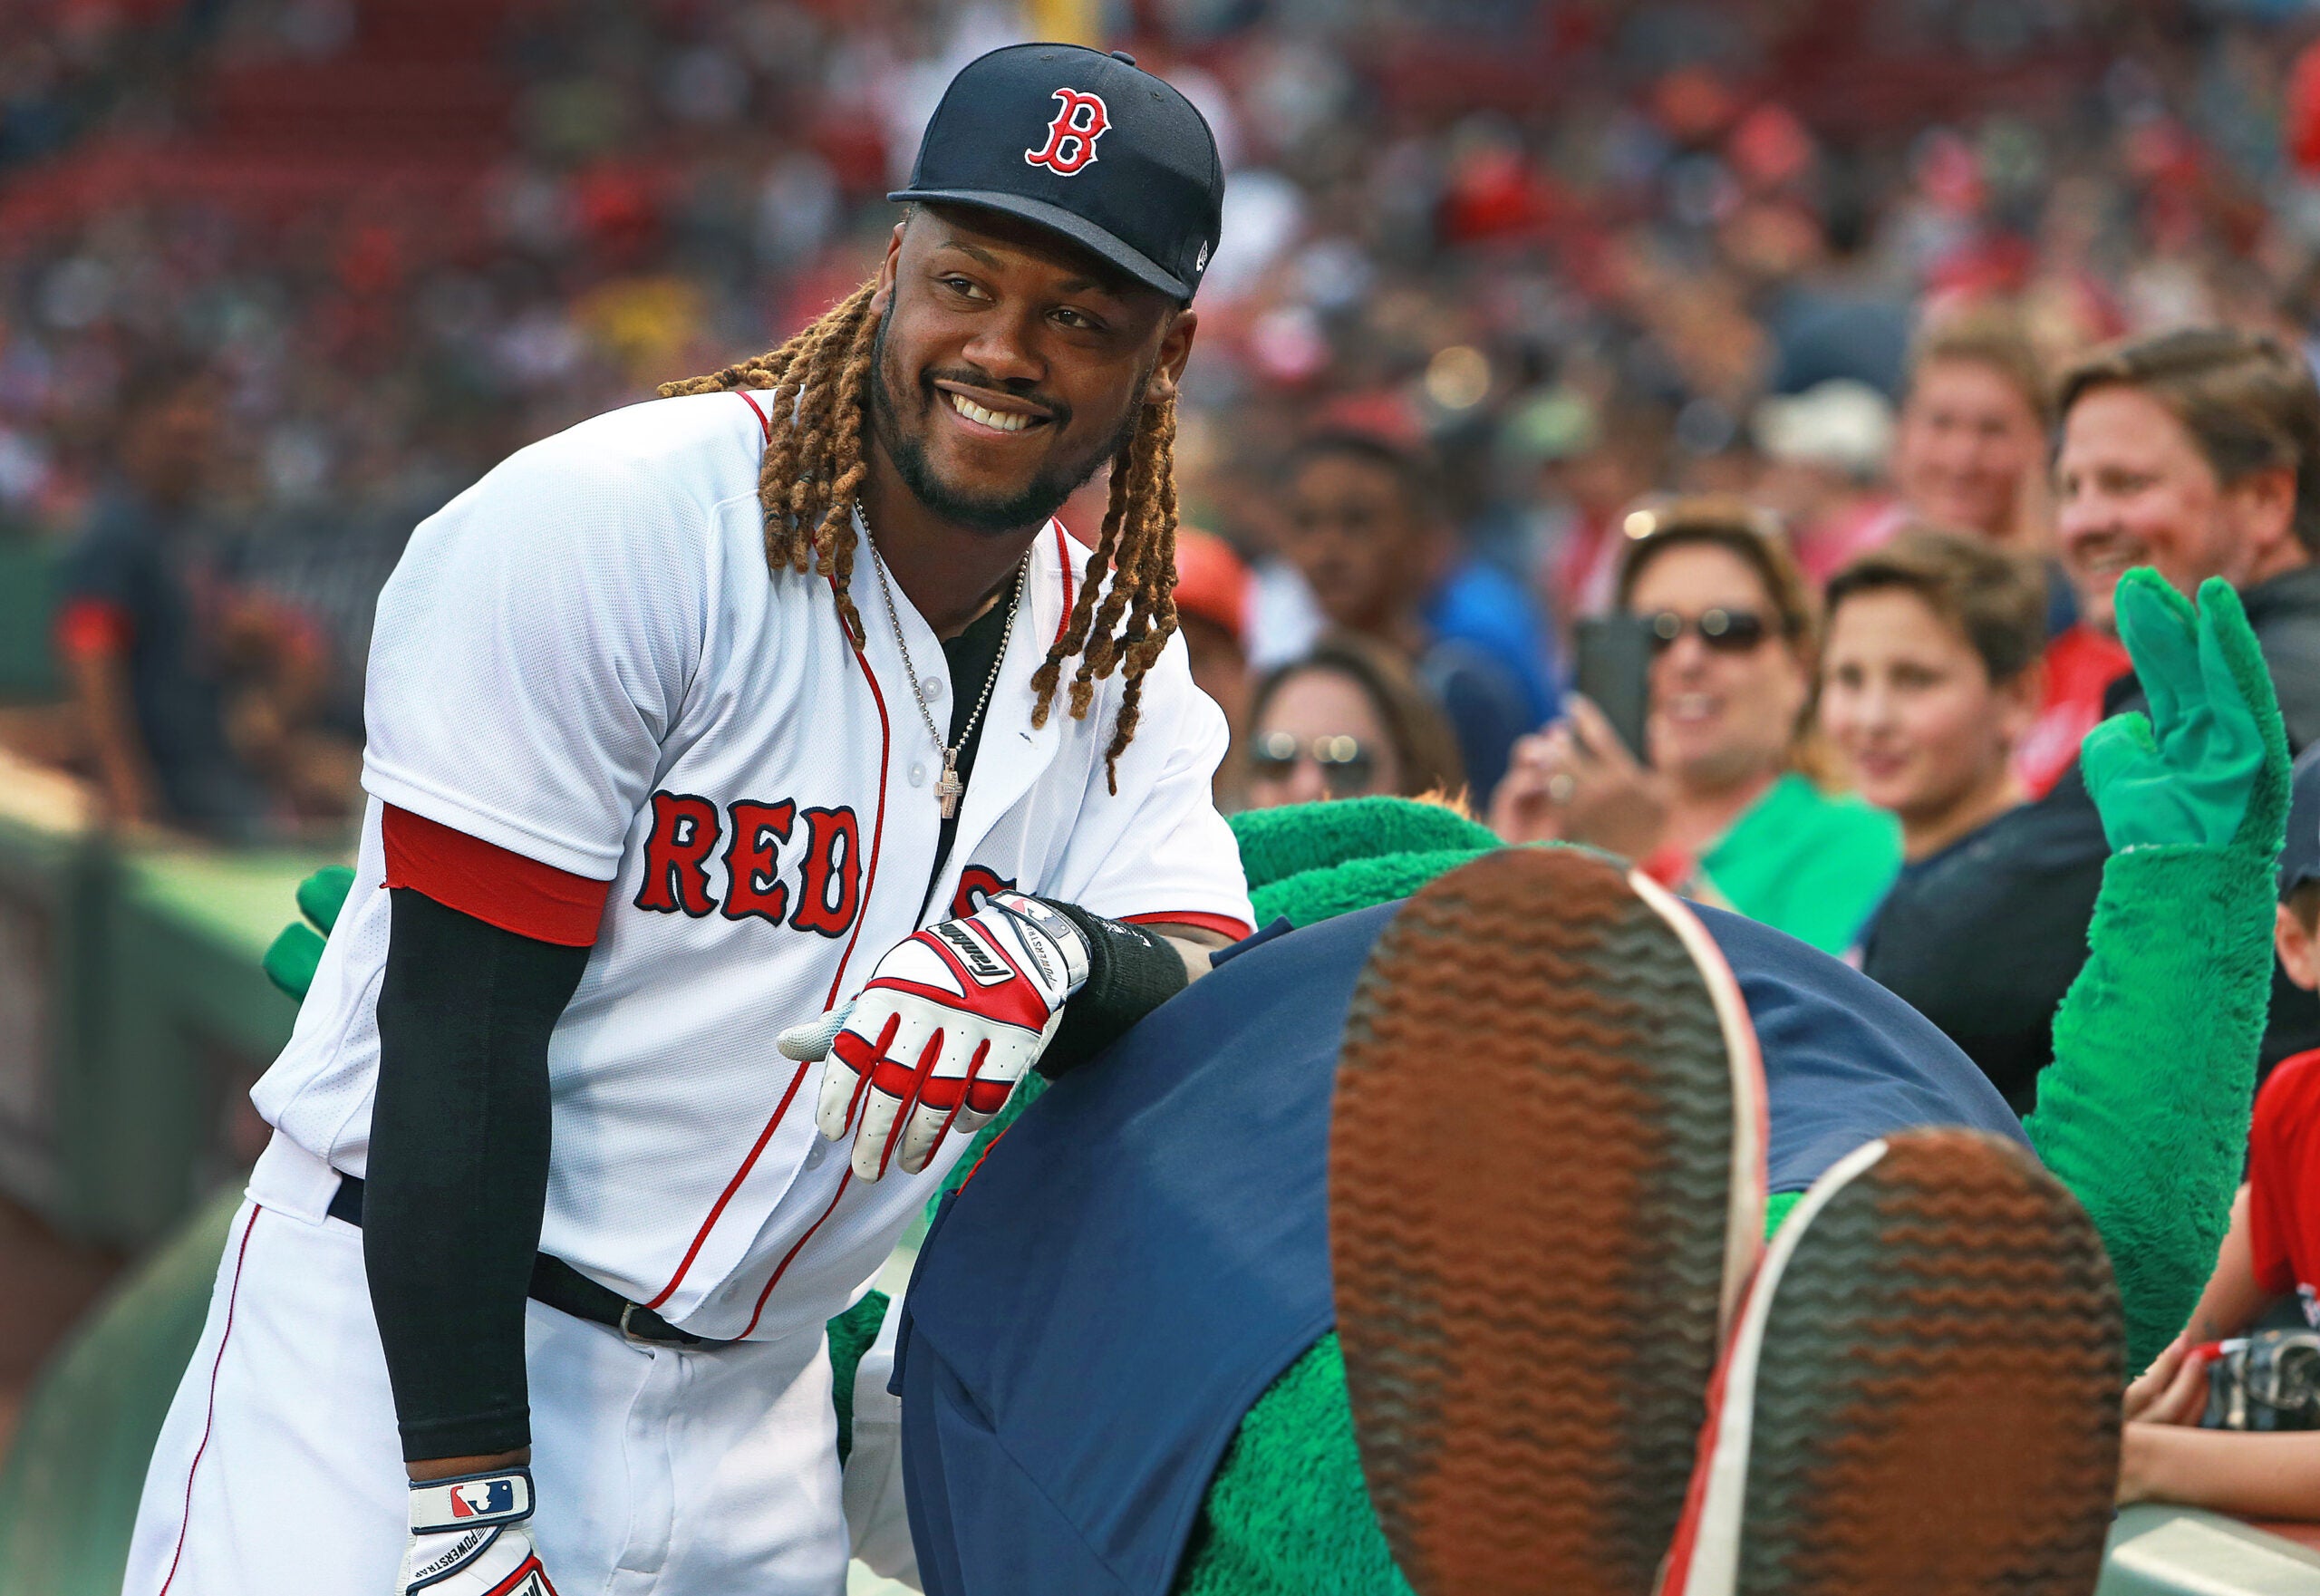 Watch: Red Sox fan fails to recognize Manny Ramirez - The Boston Globe